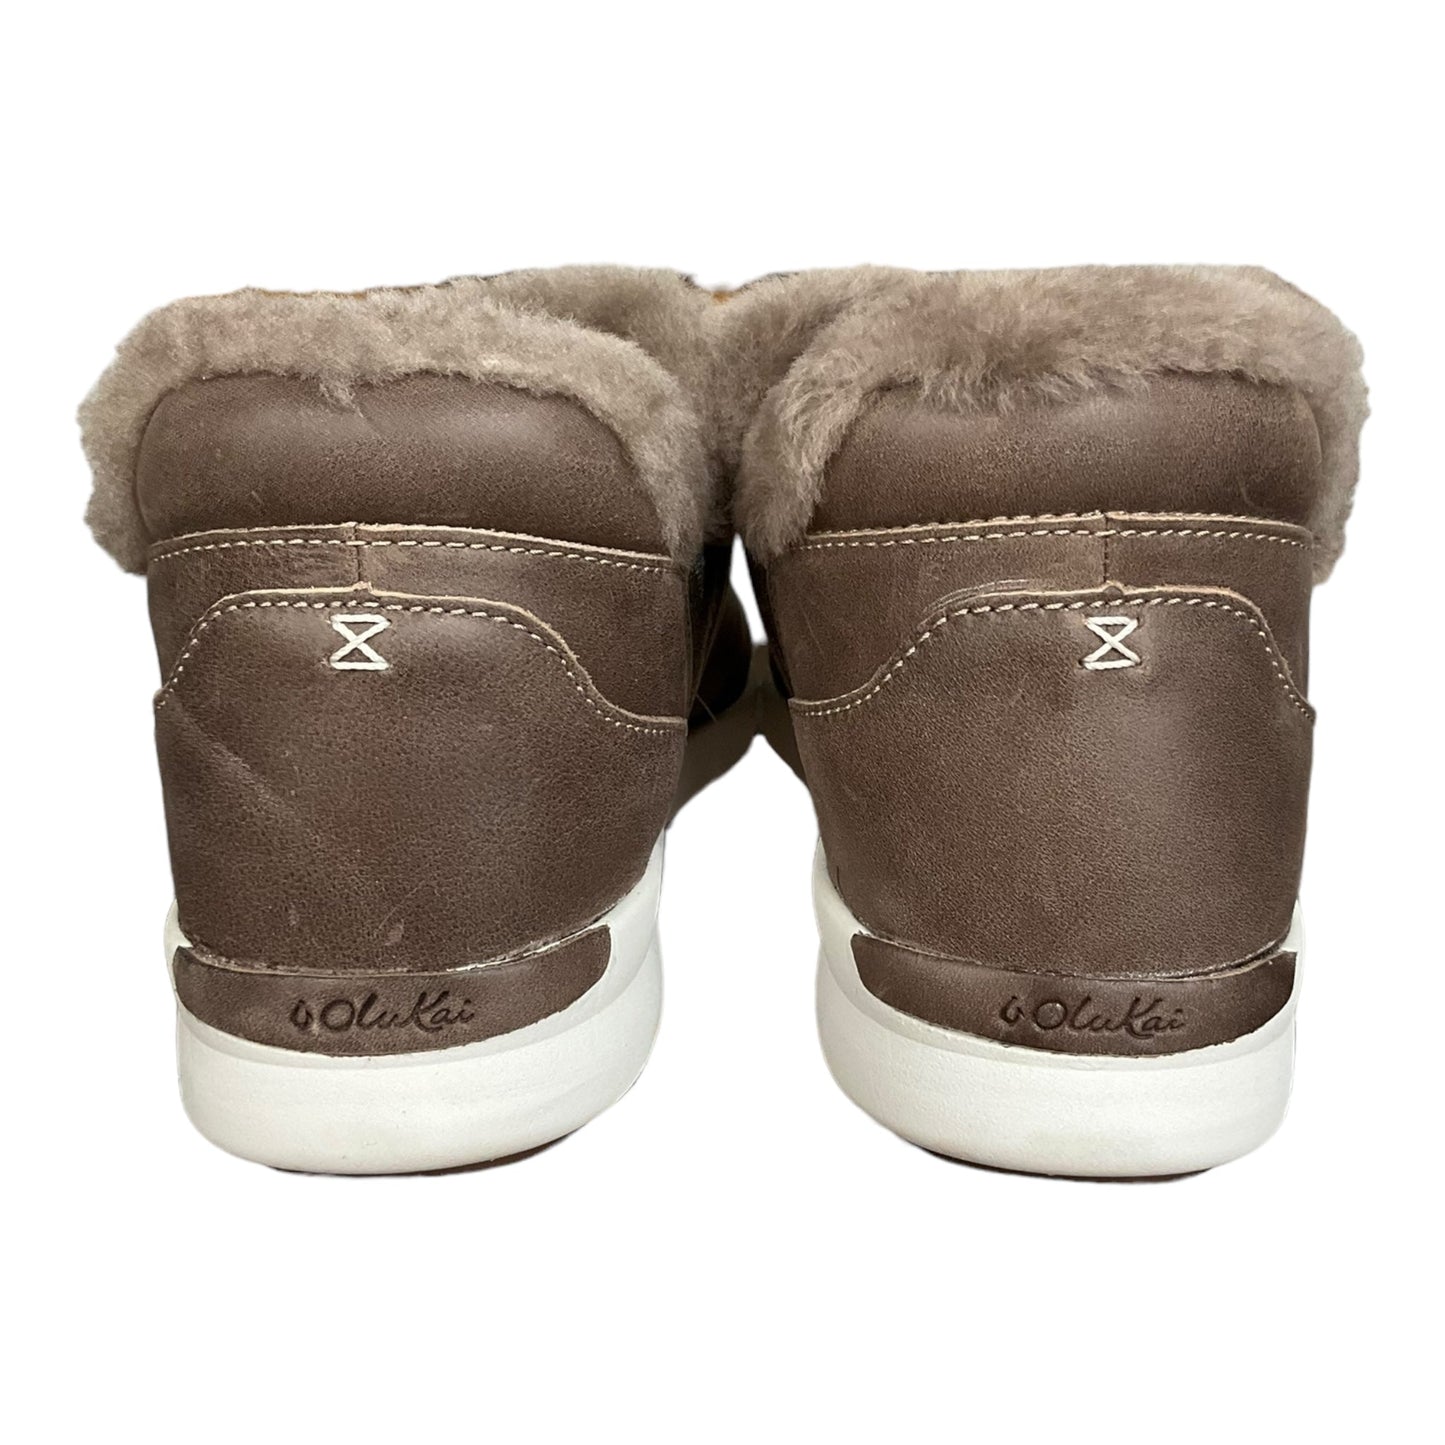 Brown Boots Leather Olukai, Size 8